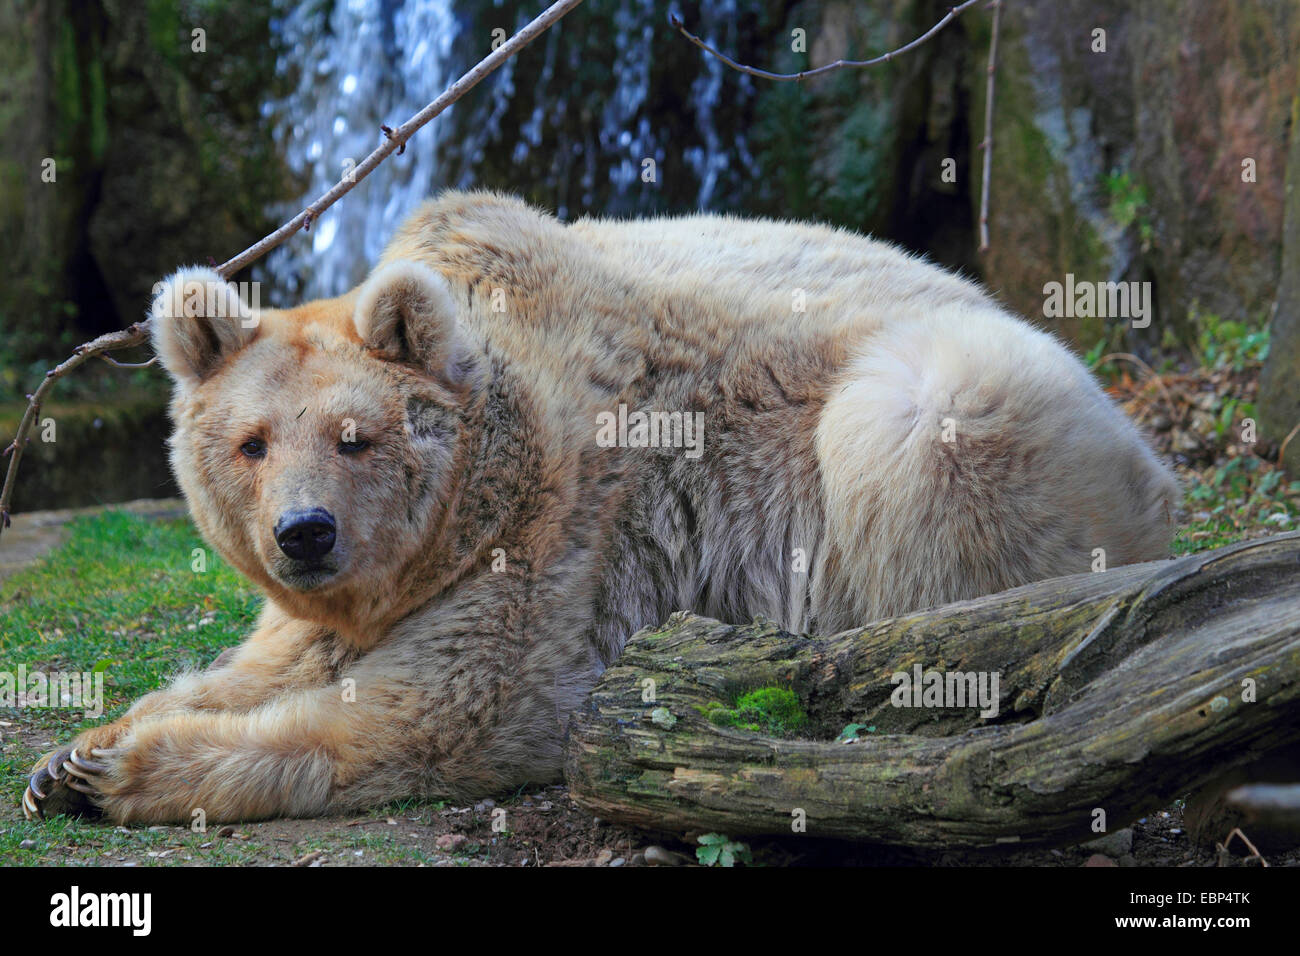 Syrian brown bear (Ursus arctos syriacus), adult brown bear with light brown fur Stock Photo